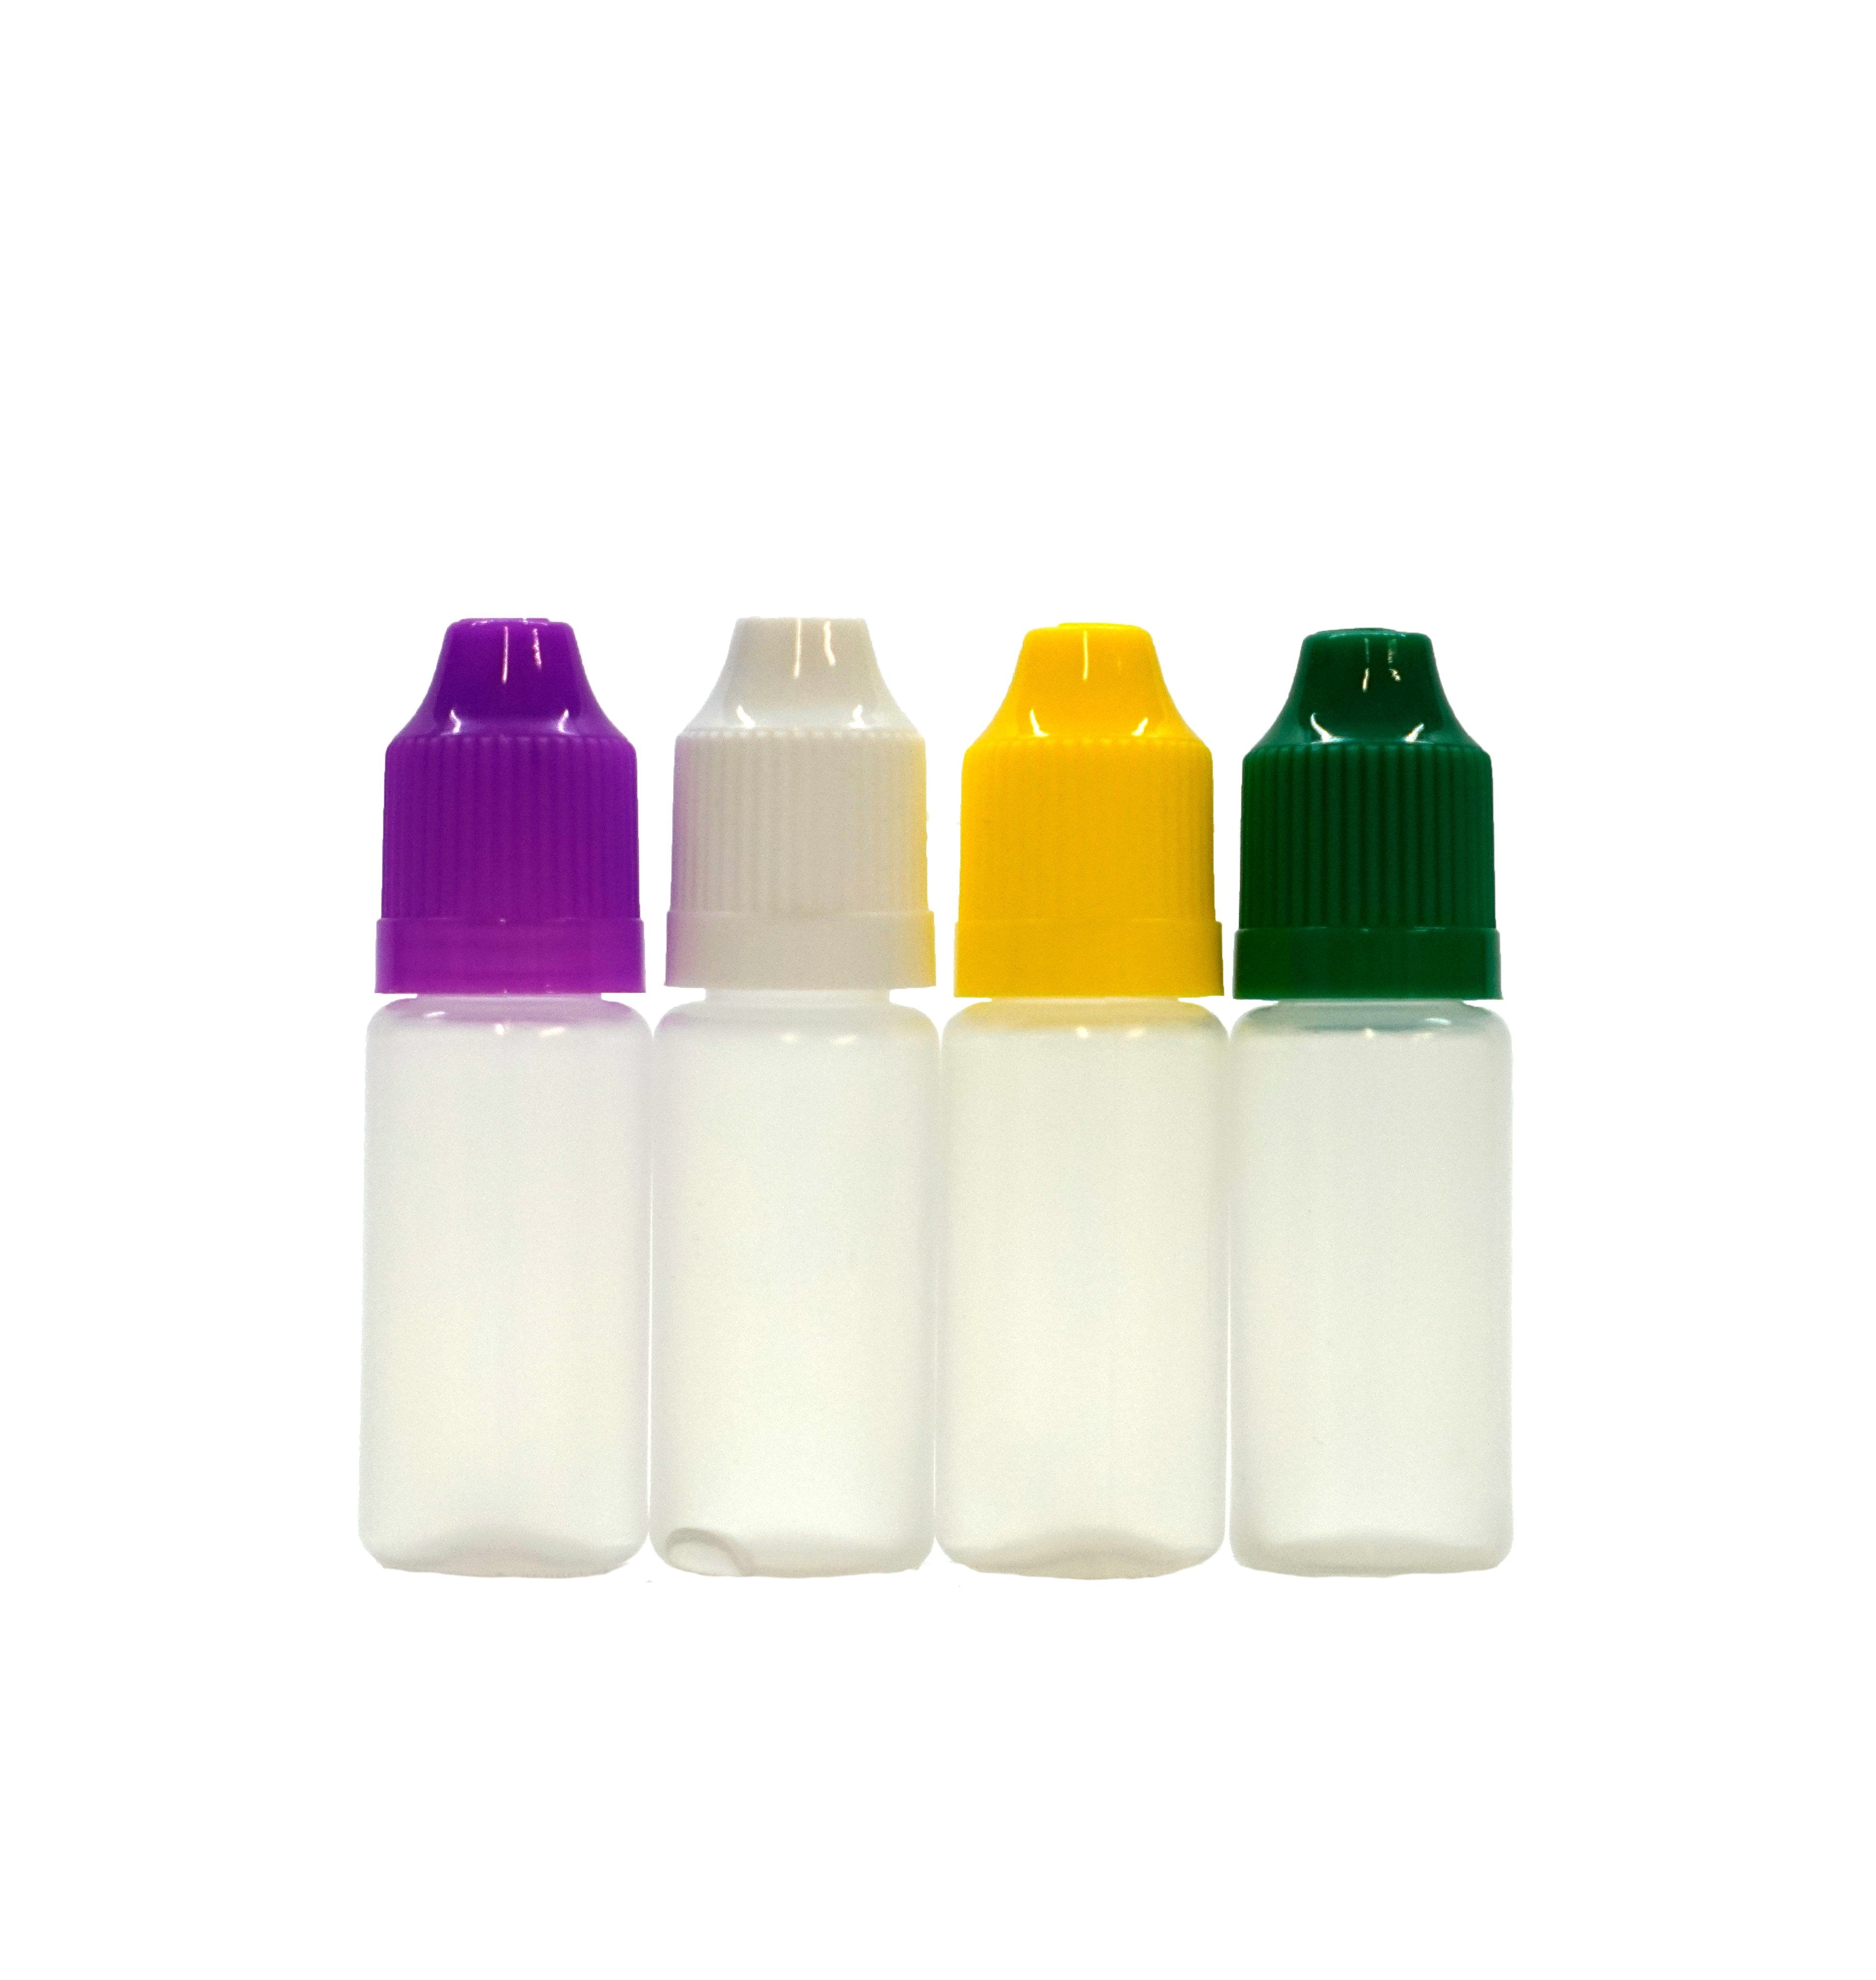 4 dropper bottles, each with different color lids